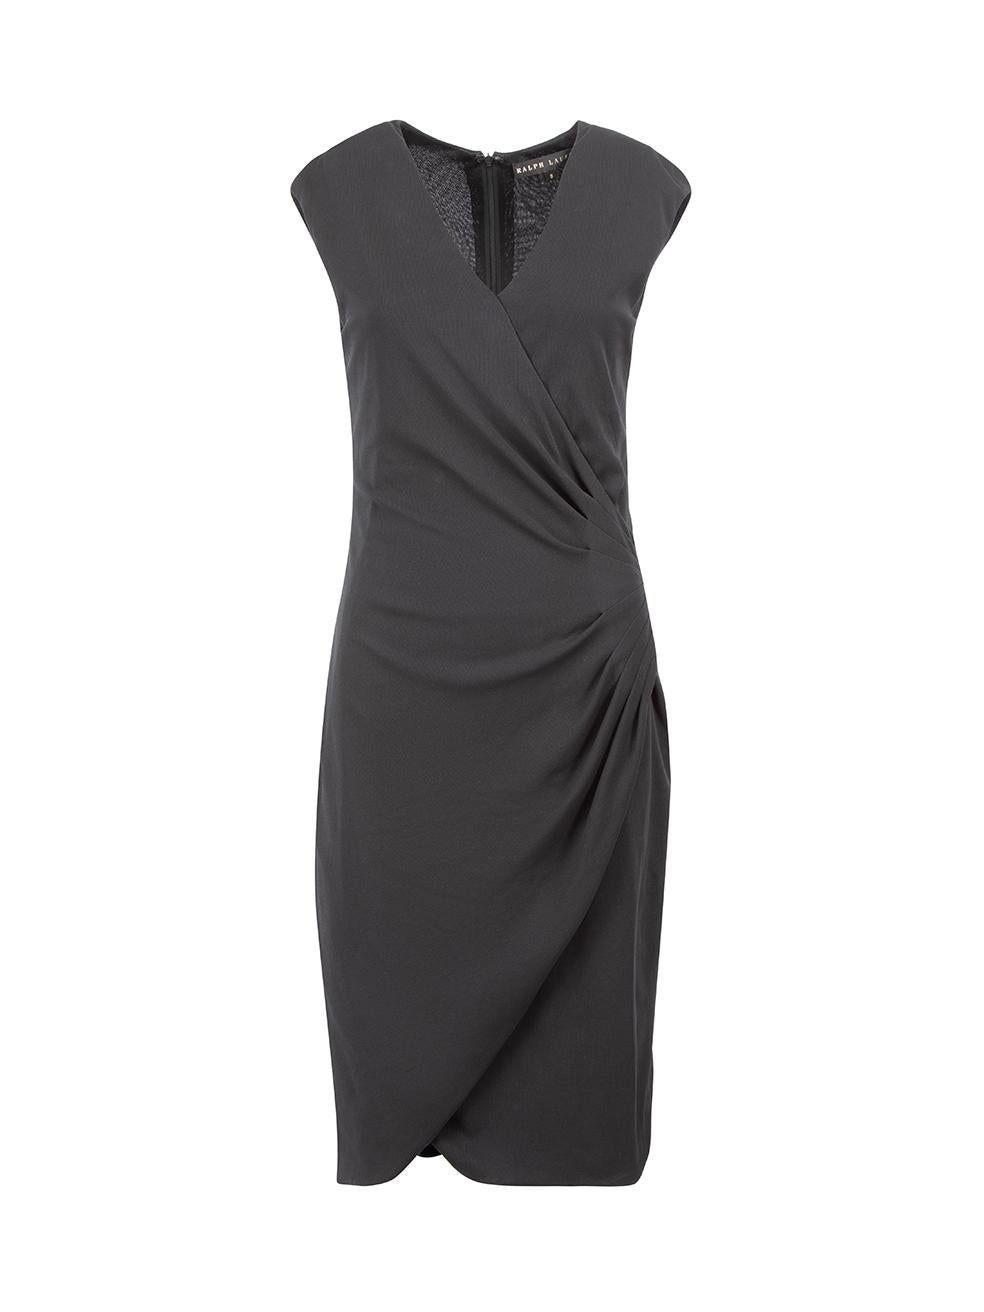 Black Sleeveless V-Neck Dress Size XS